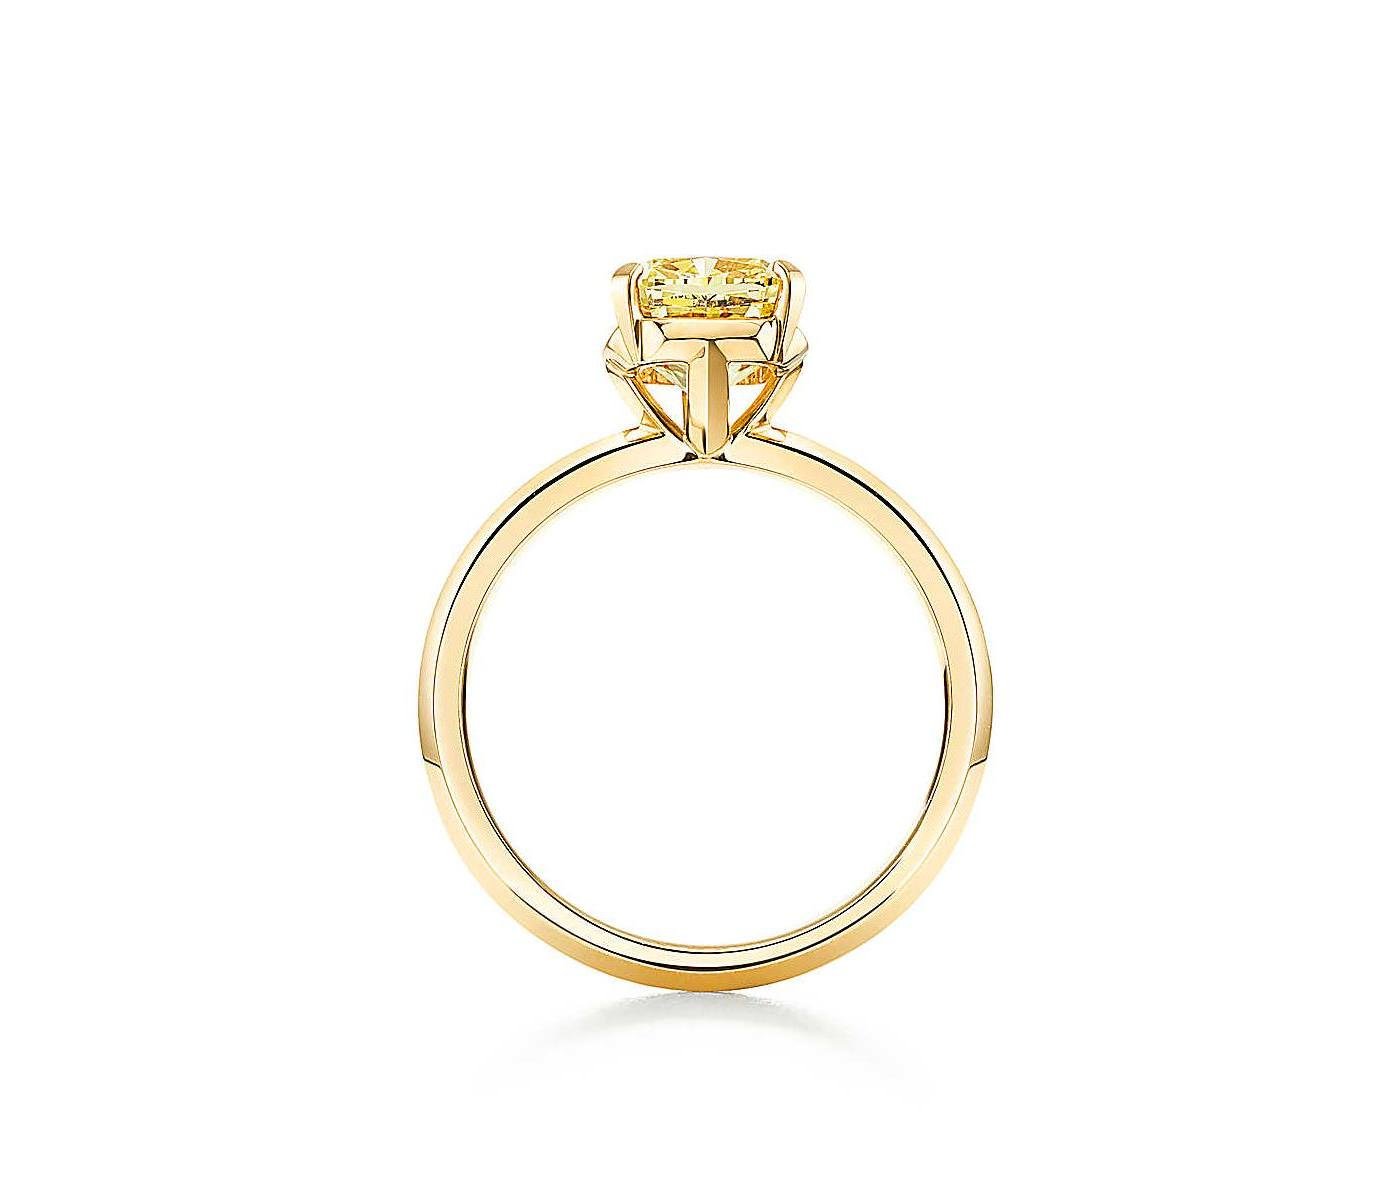 Ring by Tiffany